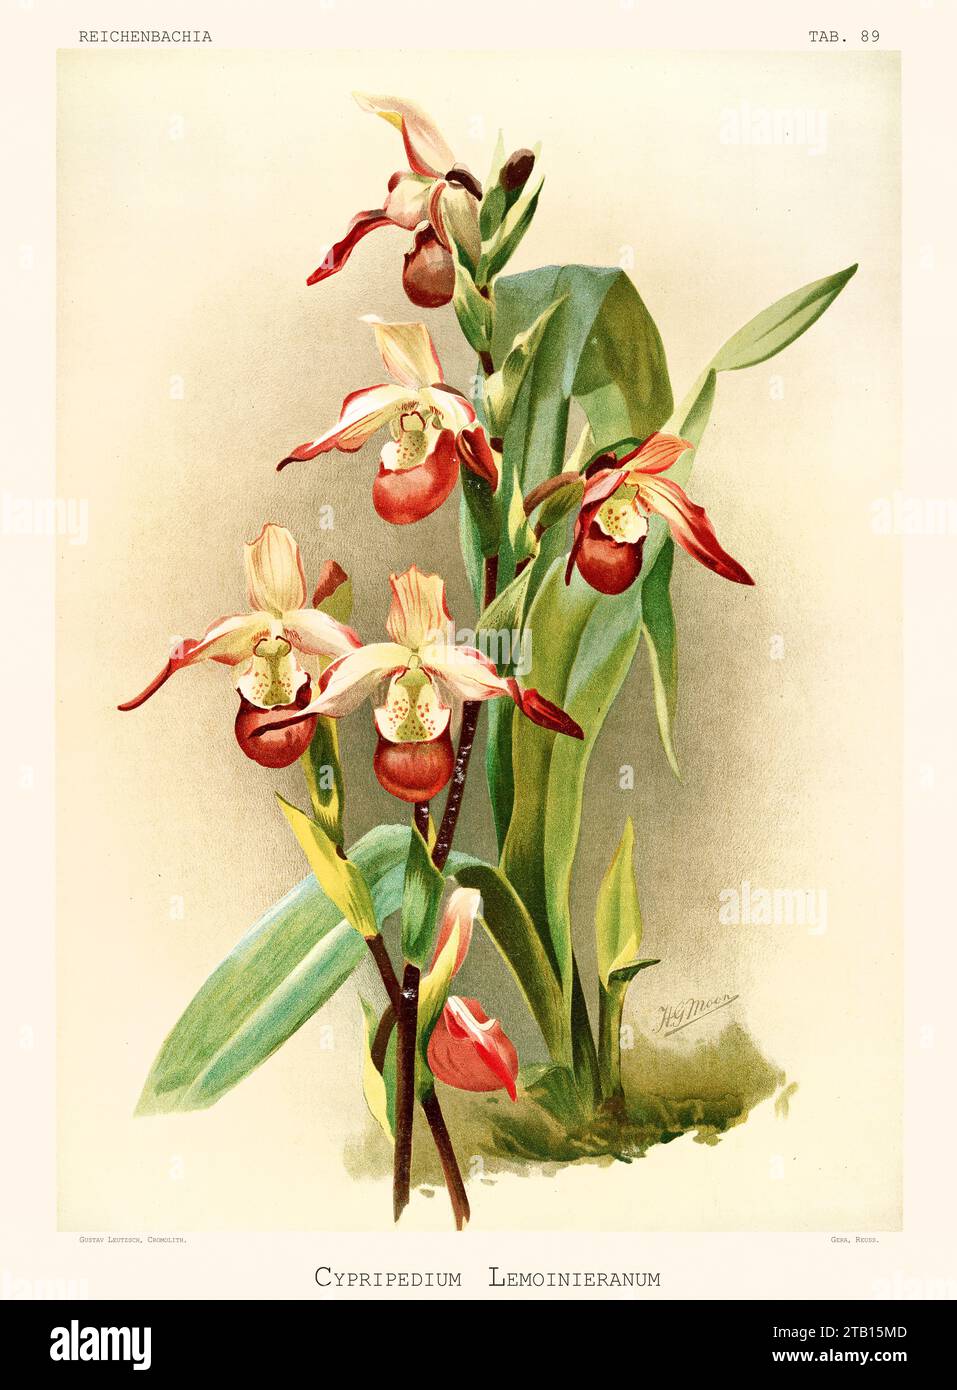 Old illustration of  Phragmipedium sedenii. Reichenbachia, by F. Sander. St. Albans, UK, 1888 - 1894 Stock Photo